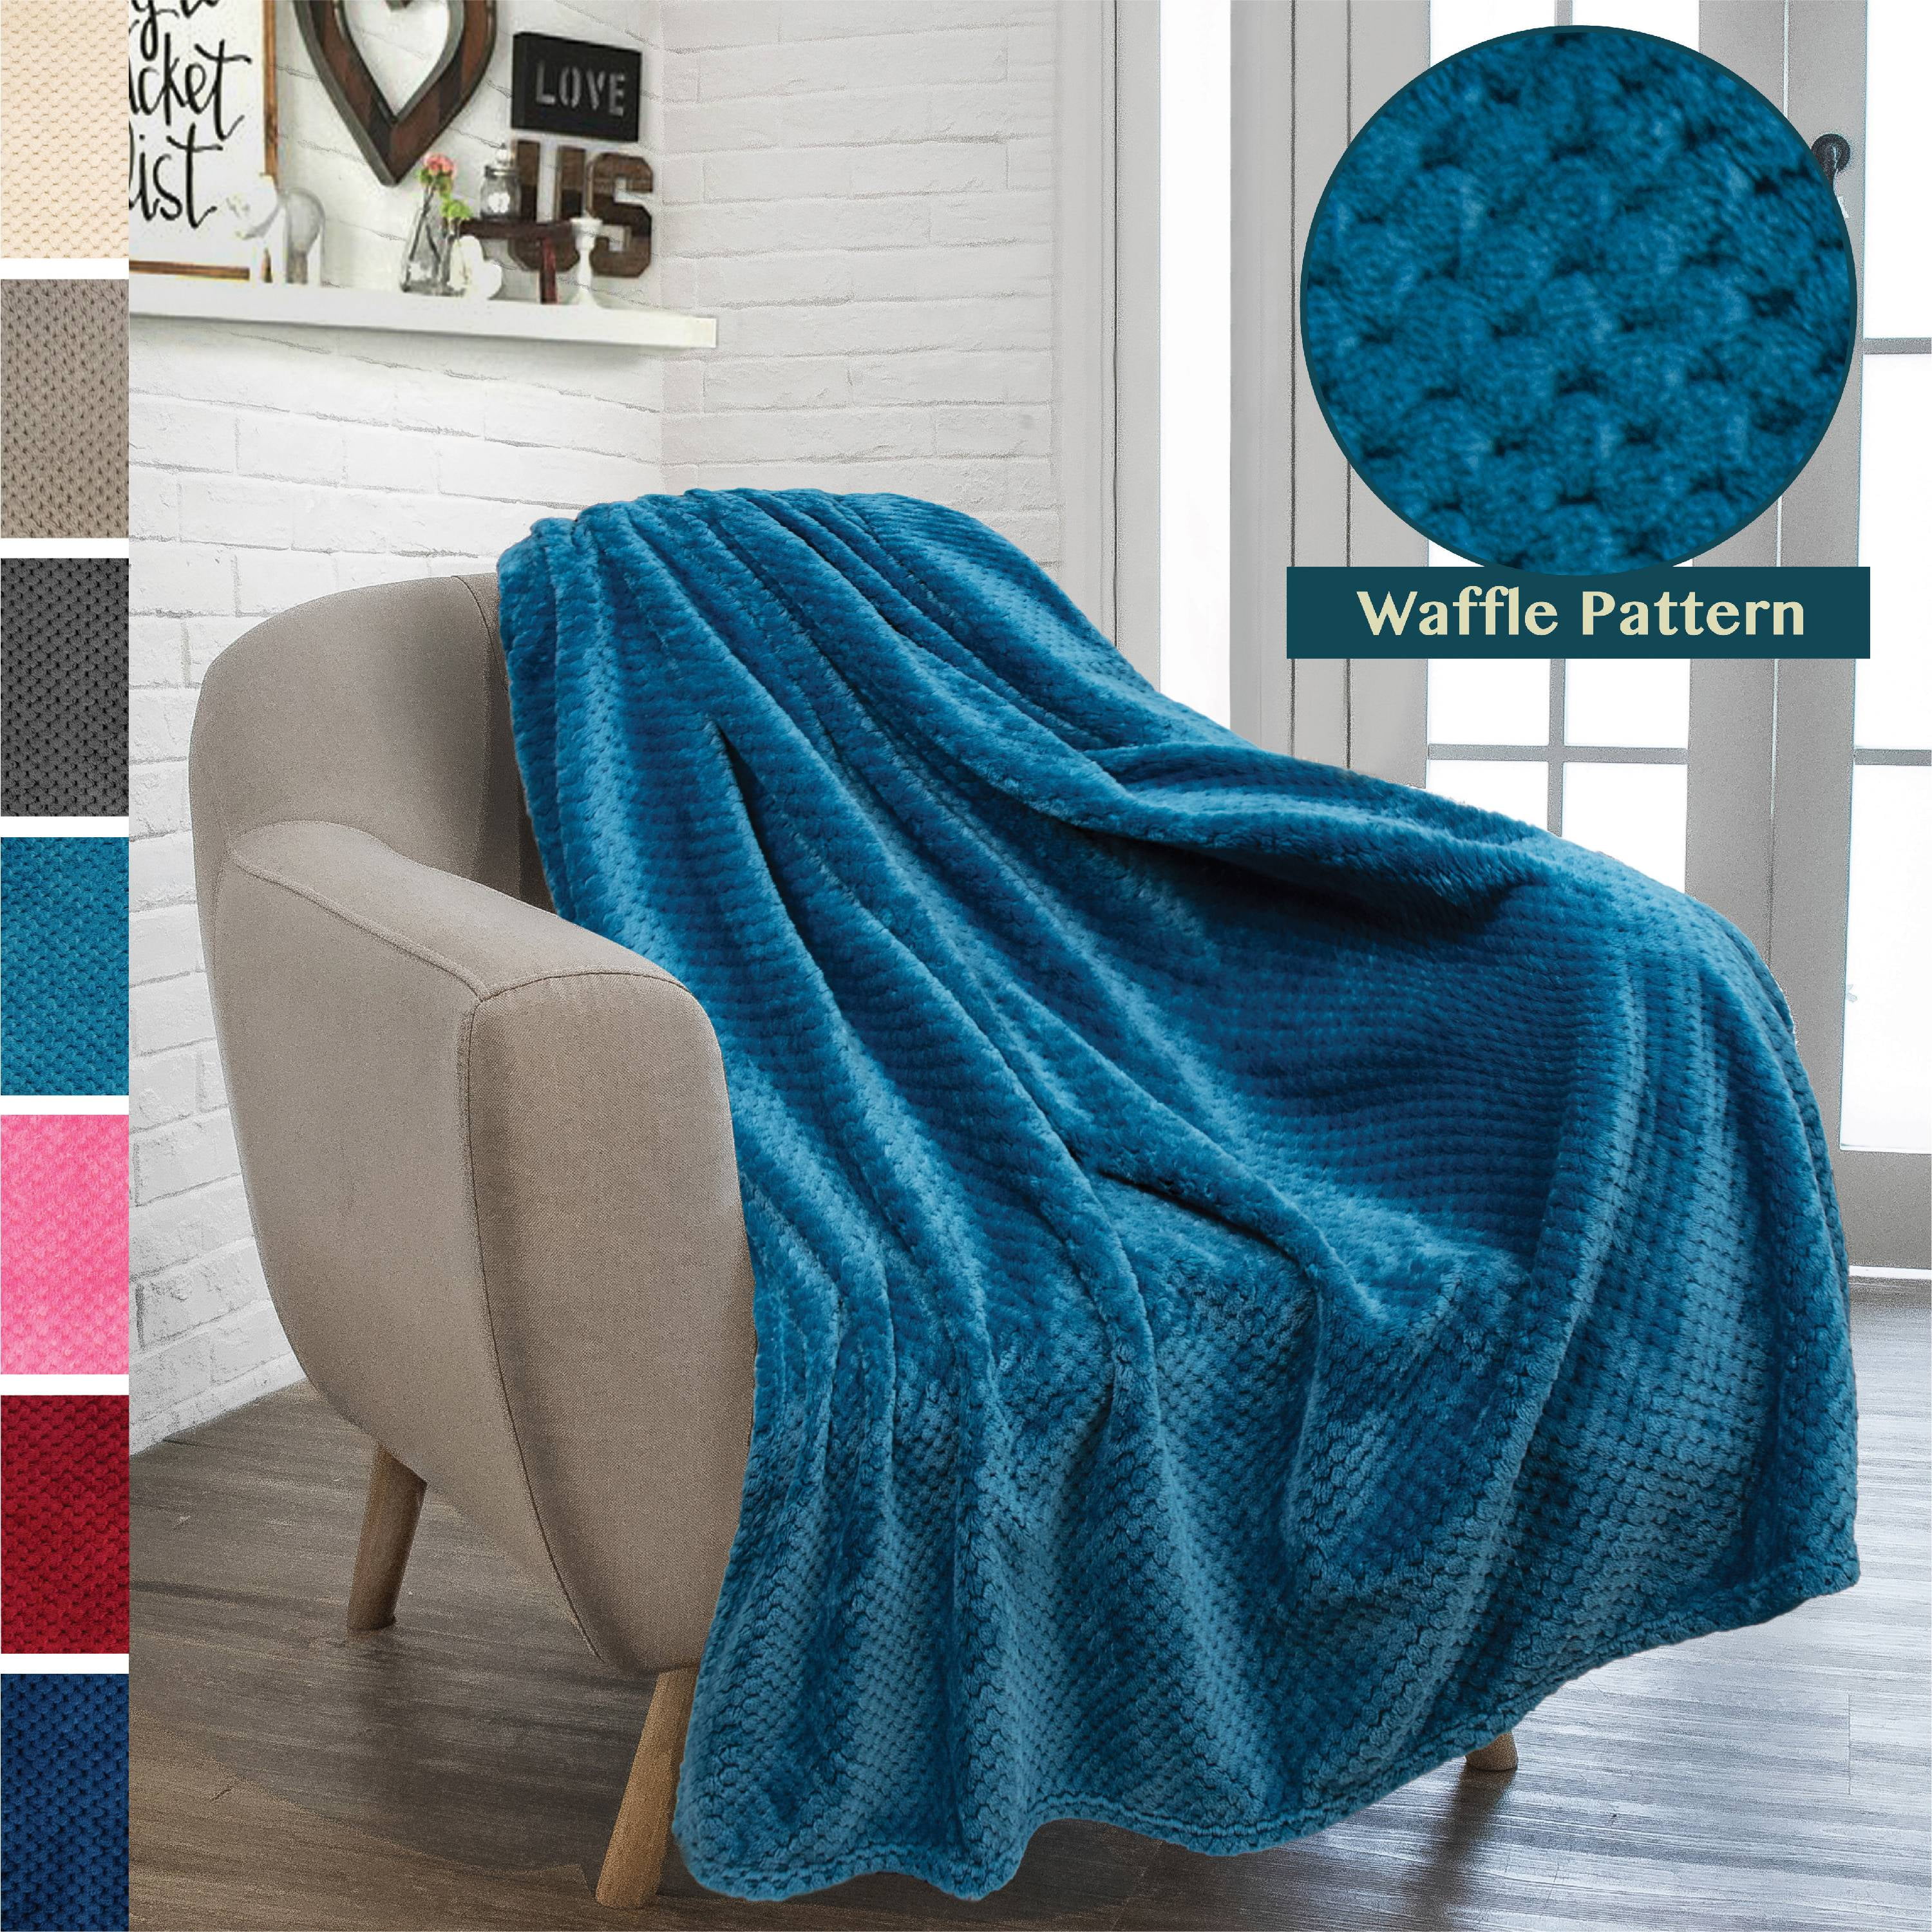 Delerain Owl Flannel Fleece Throw Blanket 50x60 Living Room/Bedroom/Sofa Couch Warm Soft Bed Blanket for Kids Adults All Season 